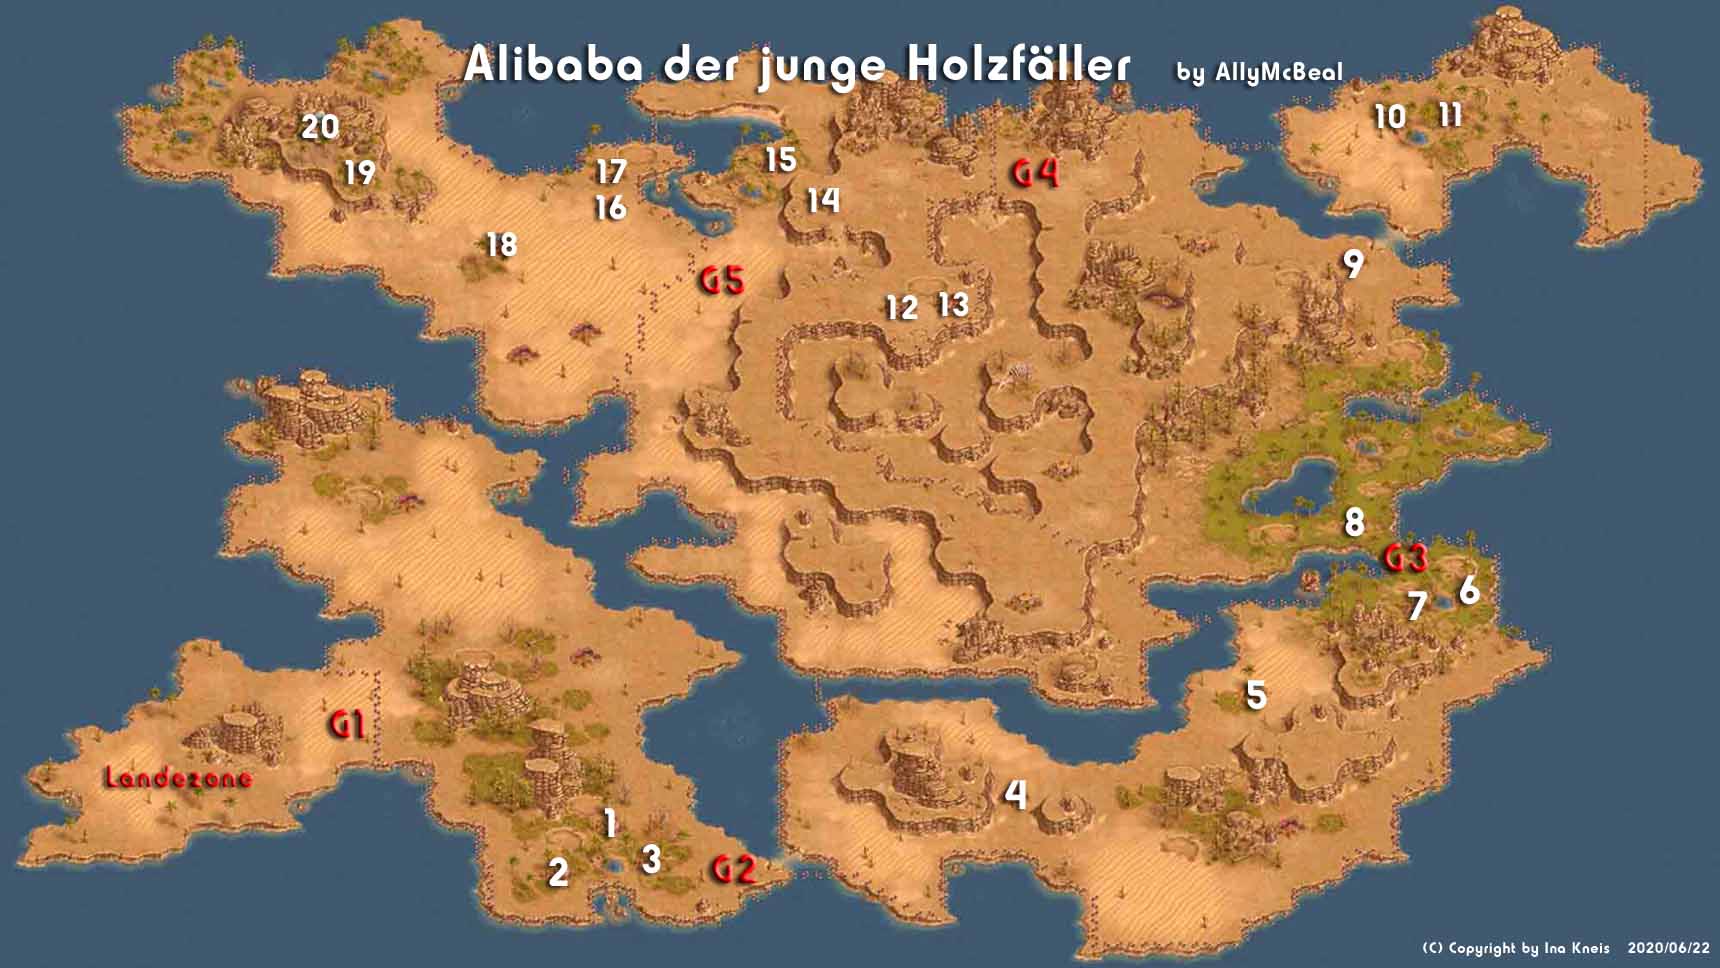 Taktikkarte alibaba_der_junge_holzfaeller